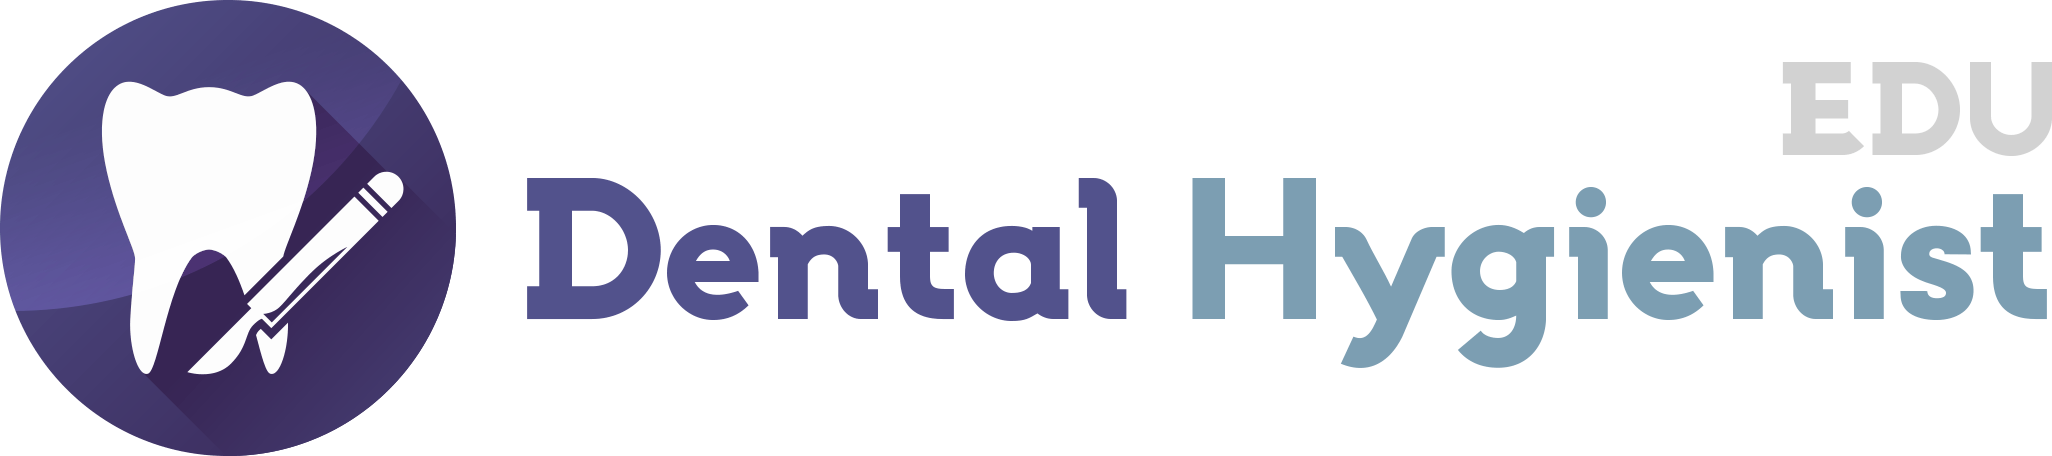 Dental Hygienist Logo - How To Become A Dental Hygienist? Hygienist Education